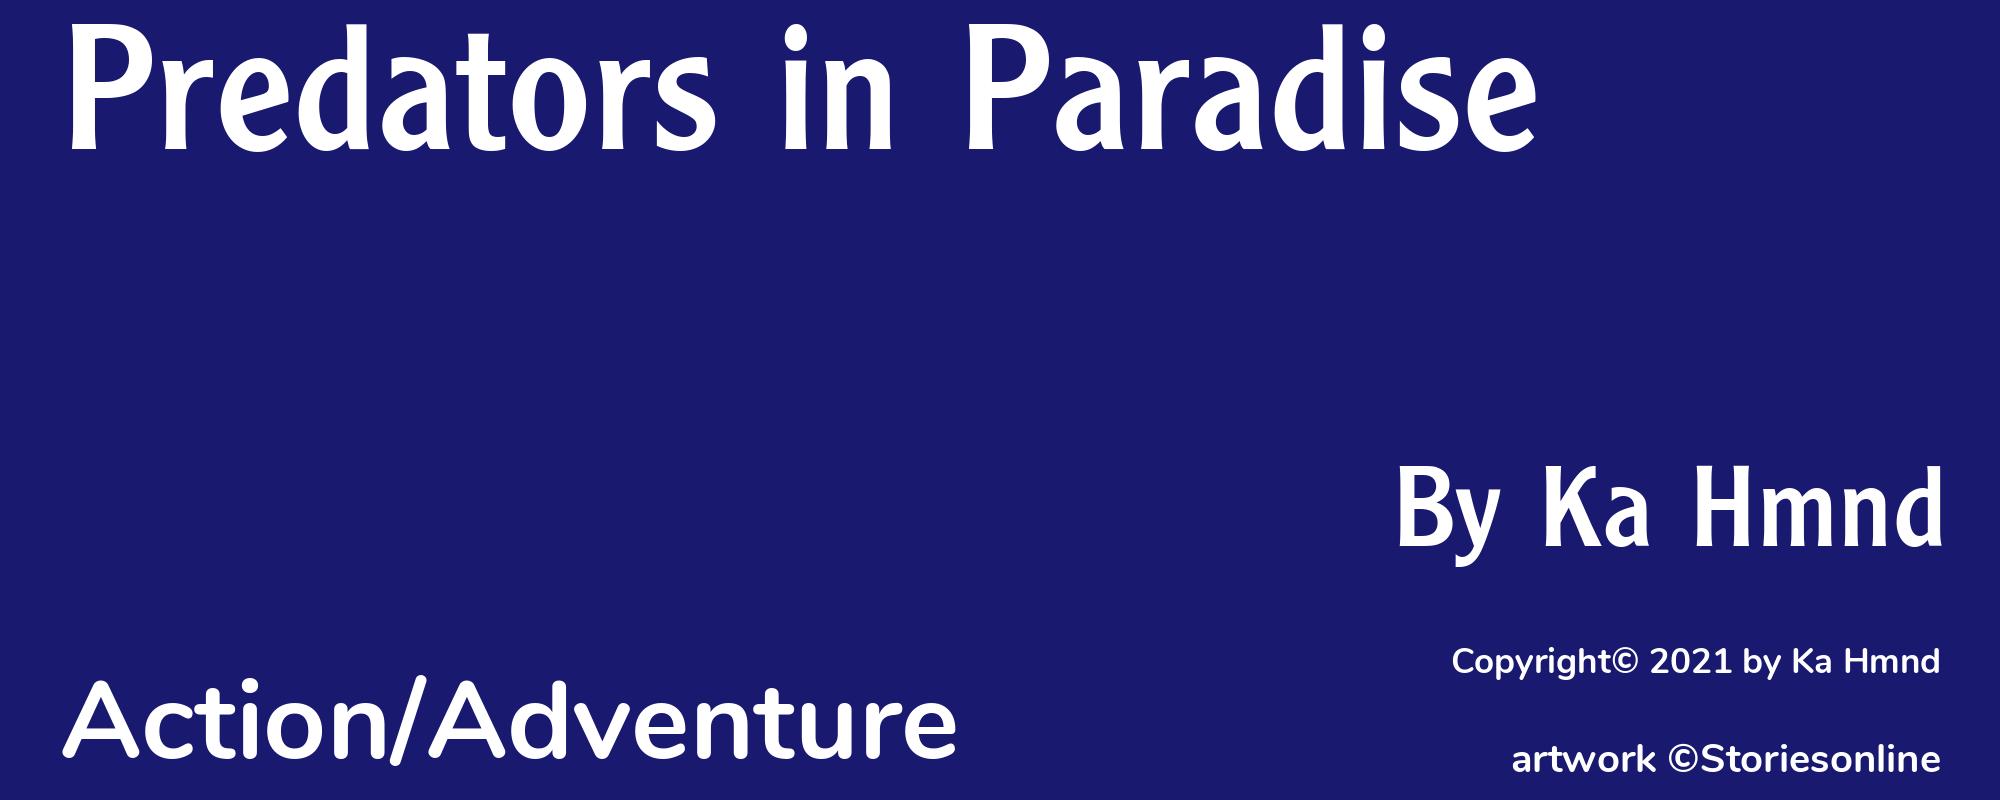 Predators in Paradise - Cover